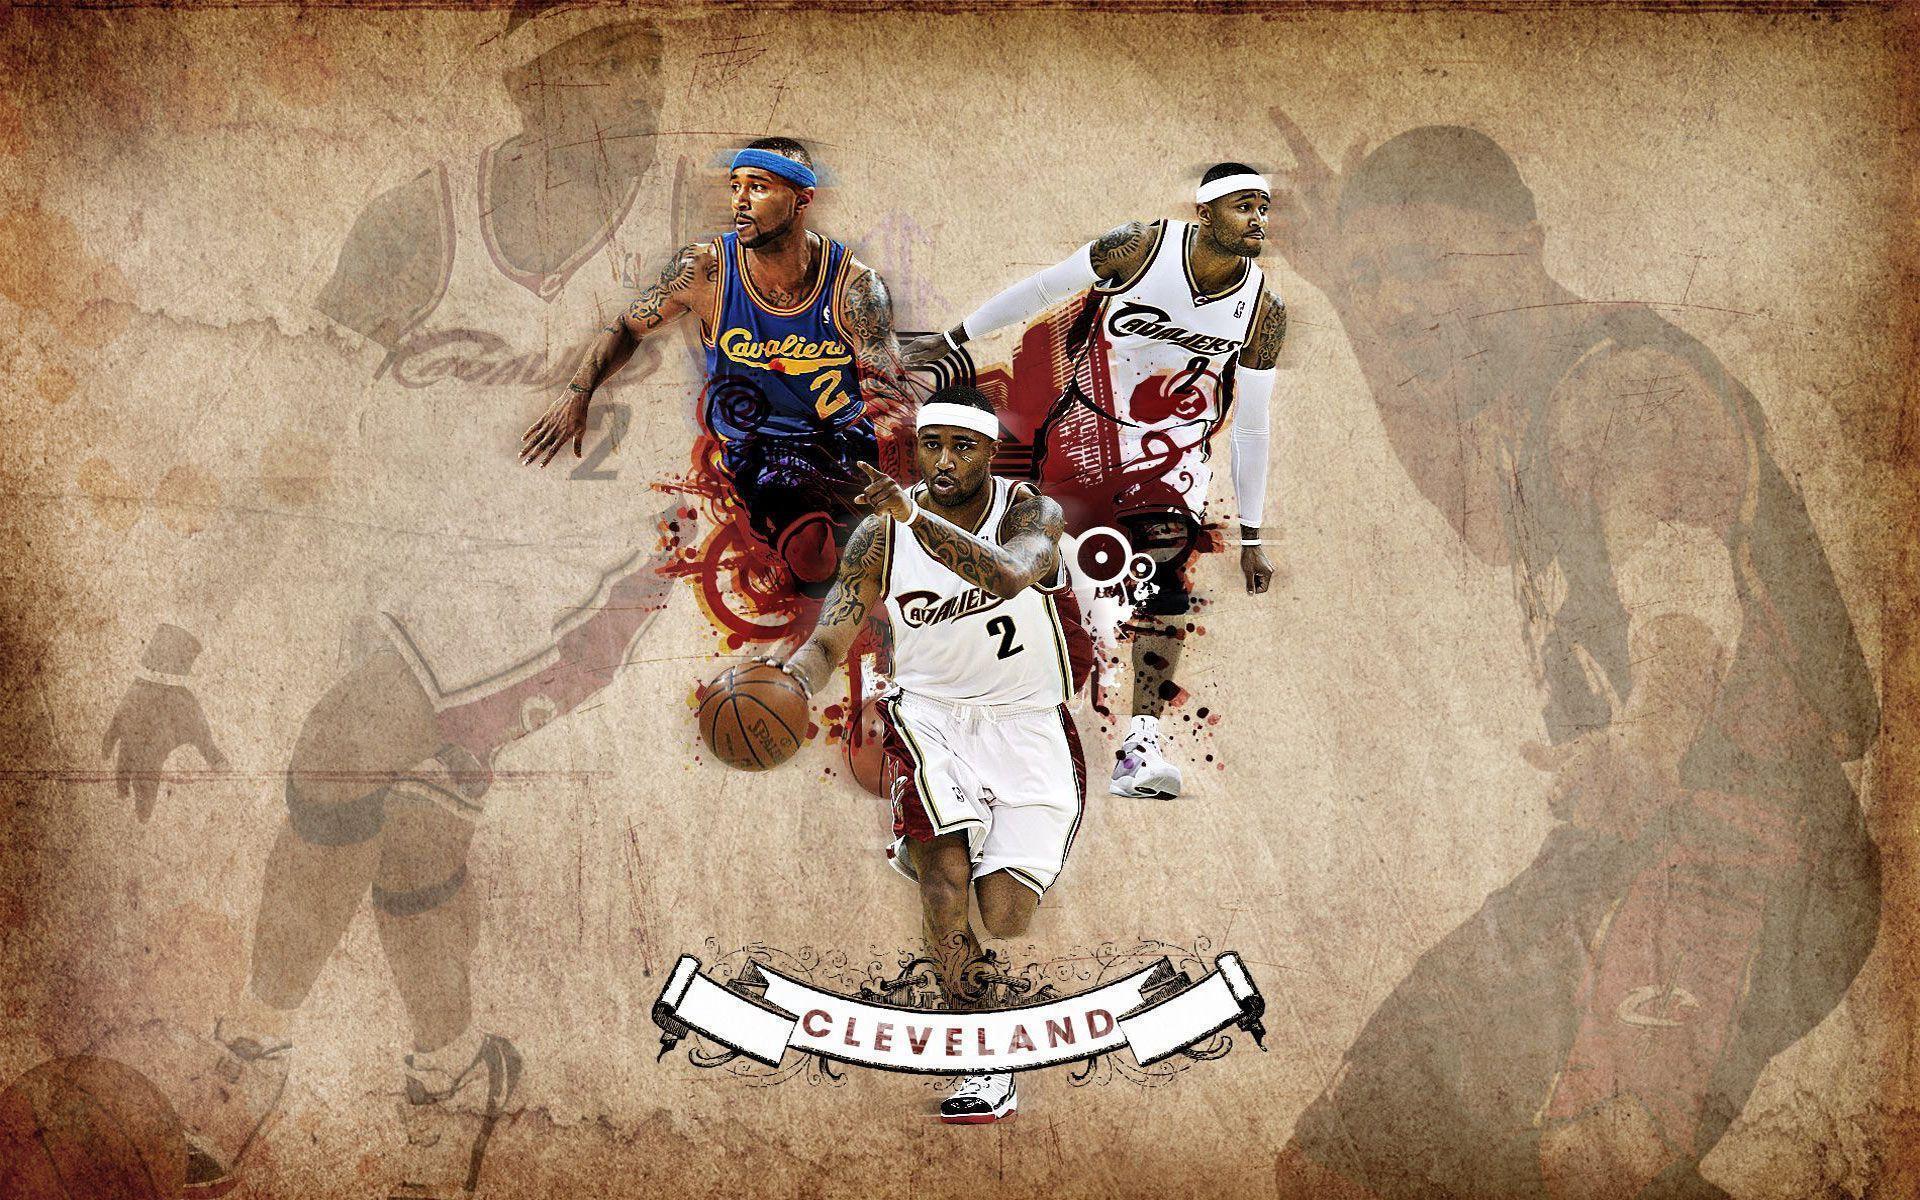 Cleveland Cavaliers Wallpaper. Basketball Wallpaper at